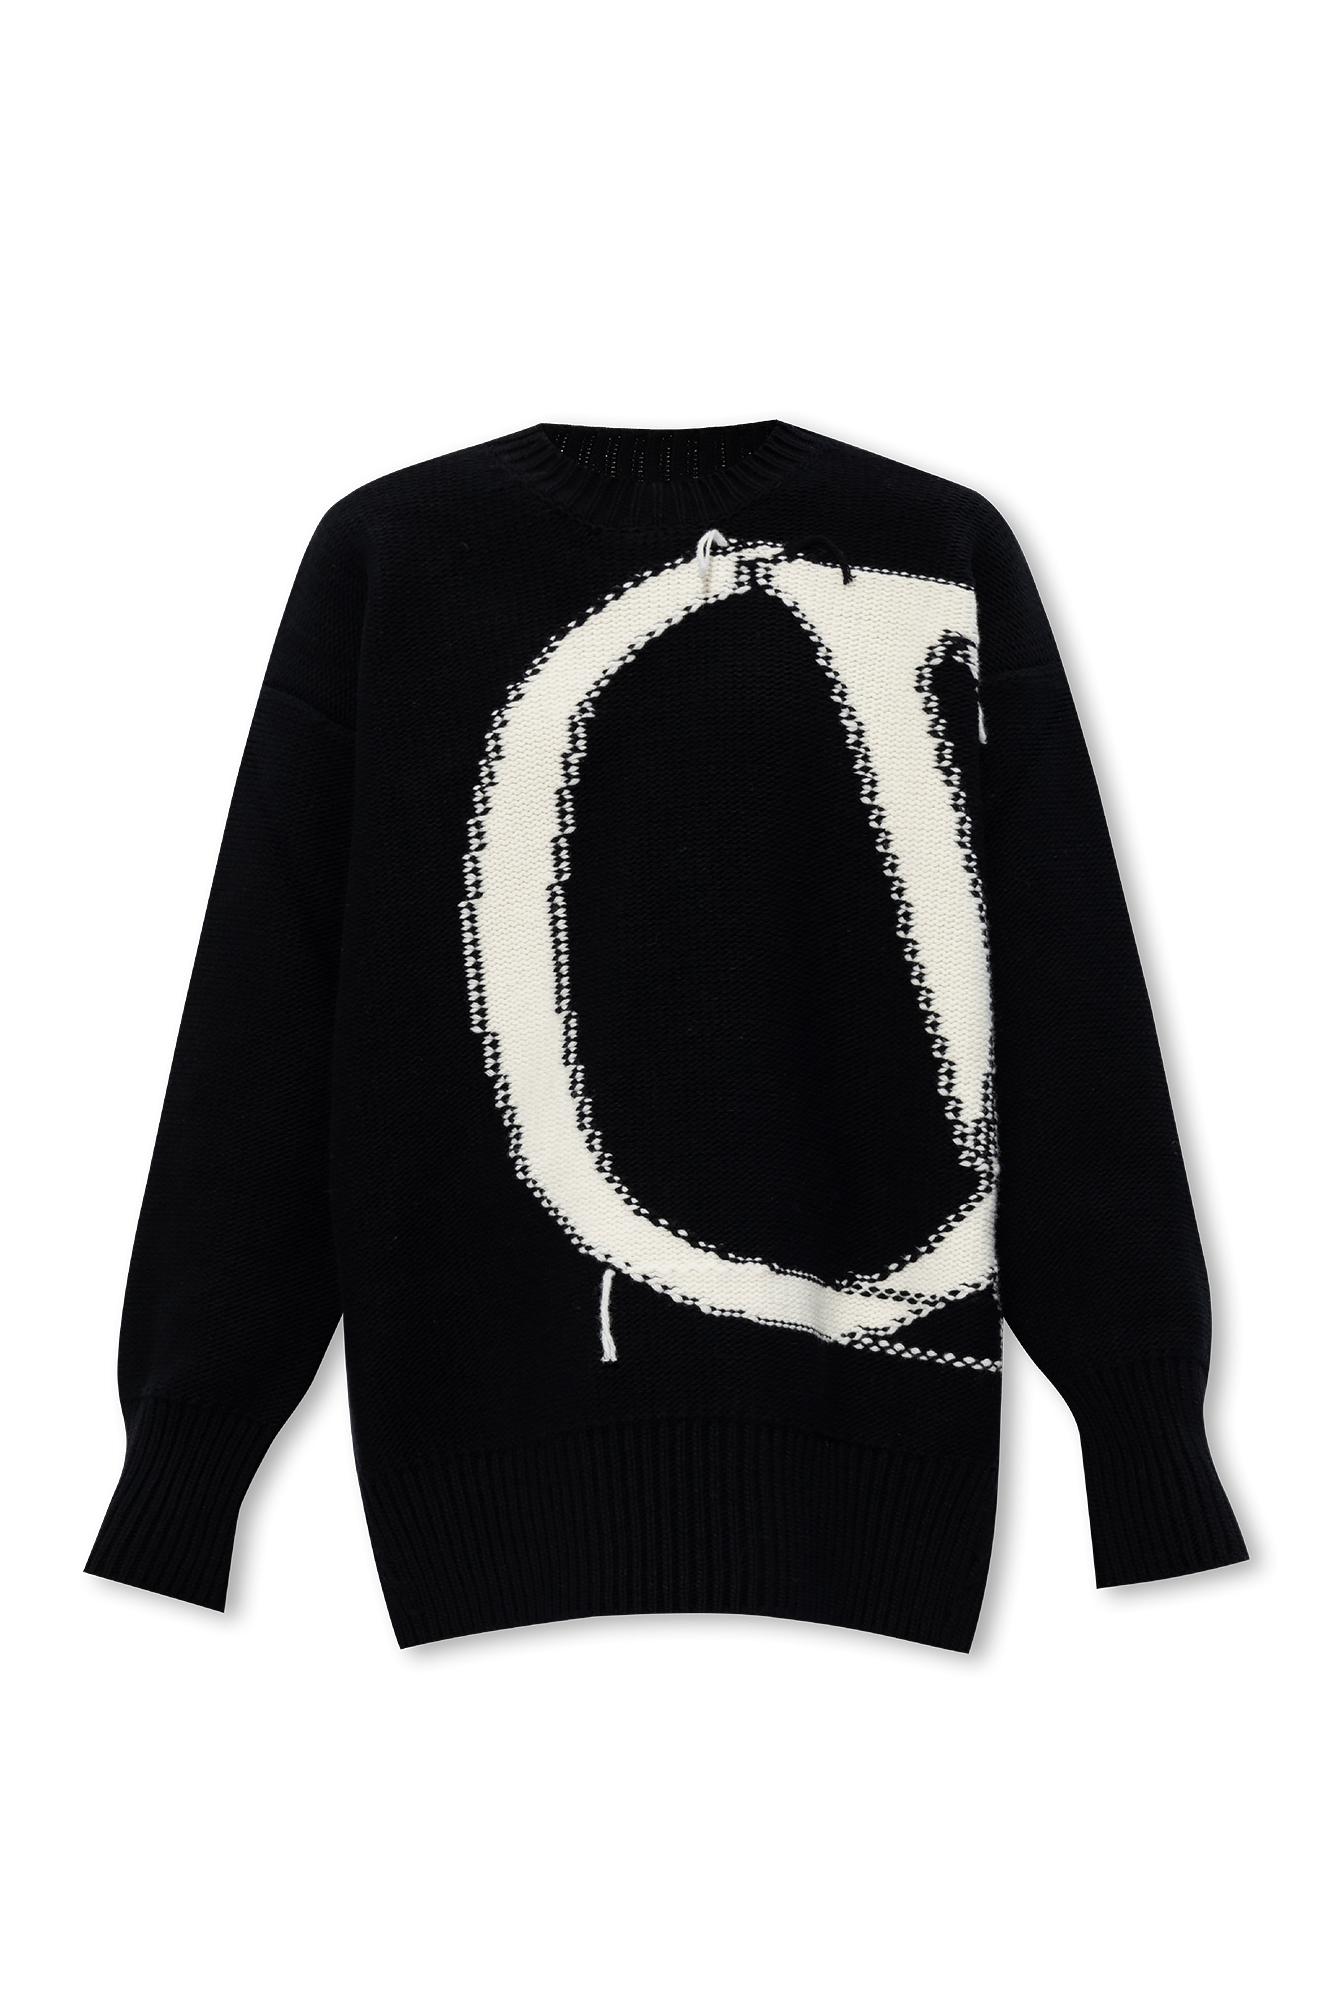 Off-White c/o Virgil Abloh - Men's Monogram Motif Sweater Crew Neck